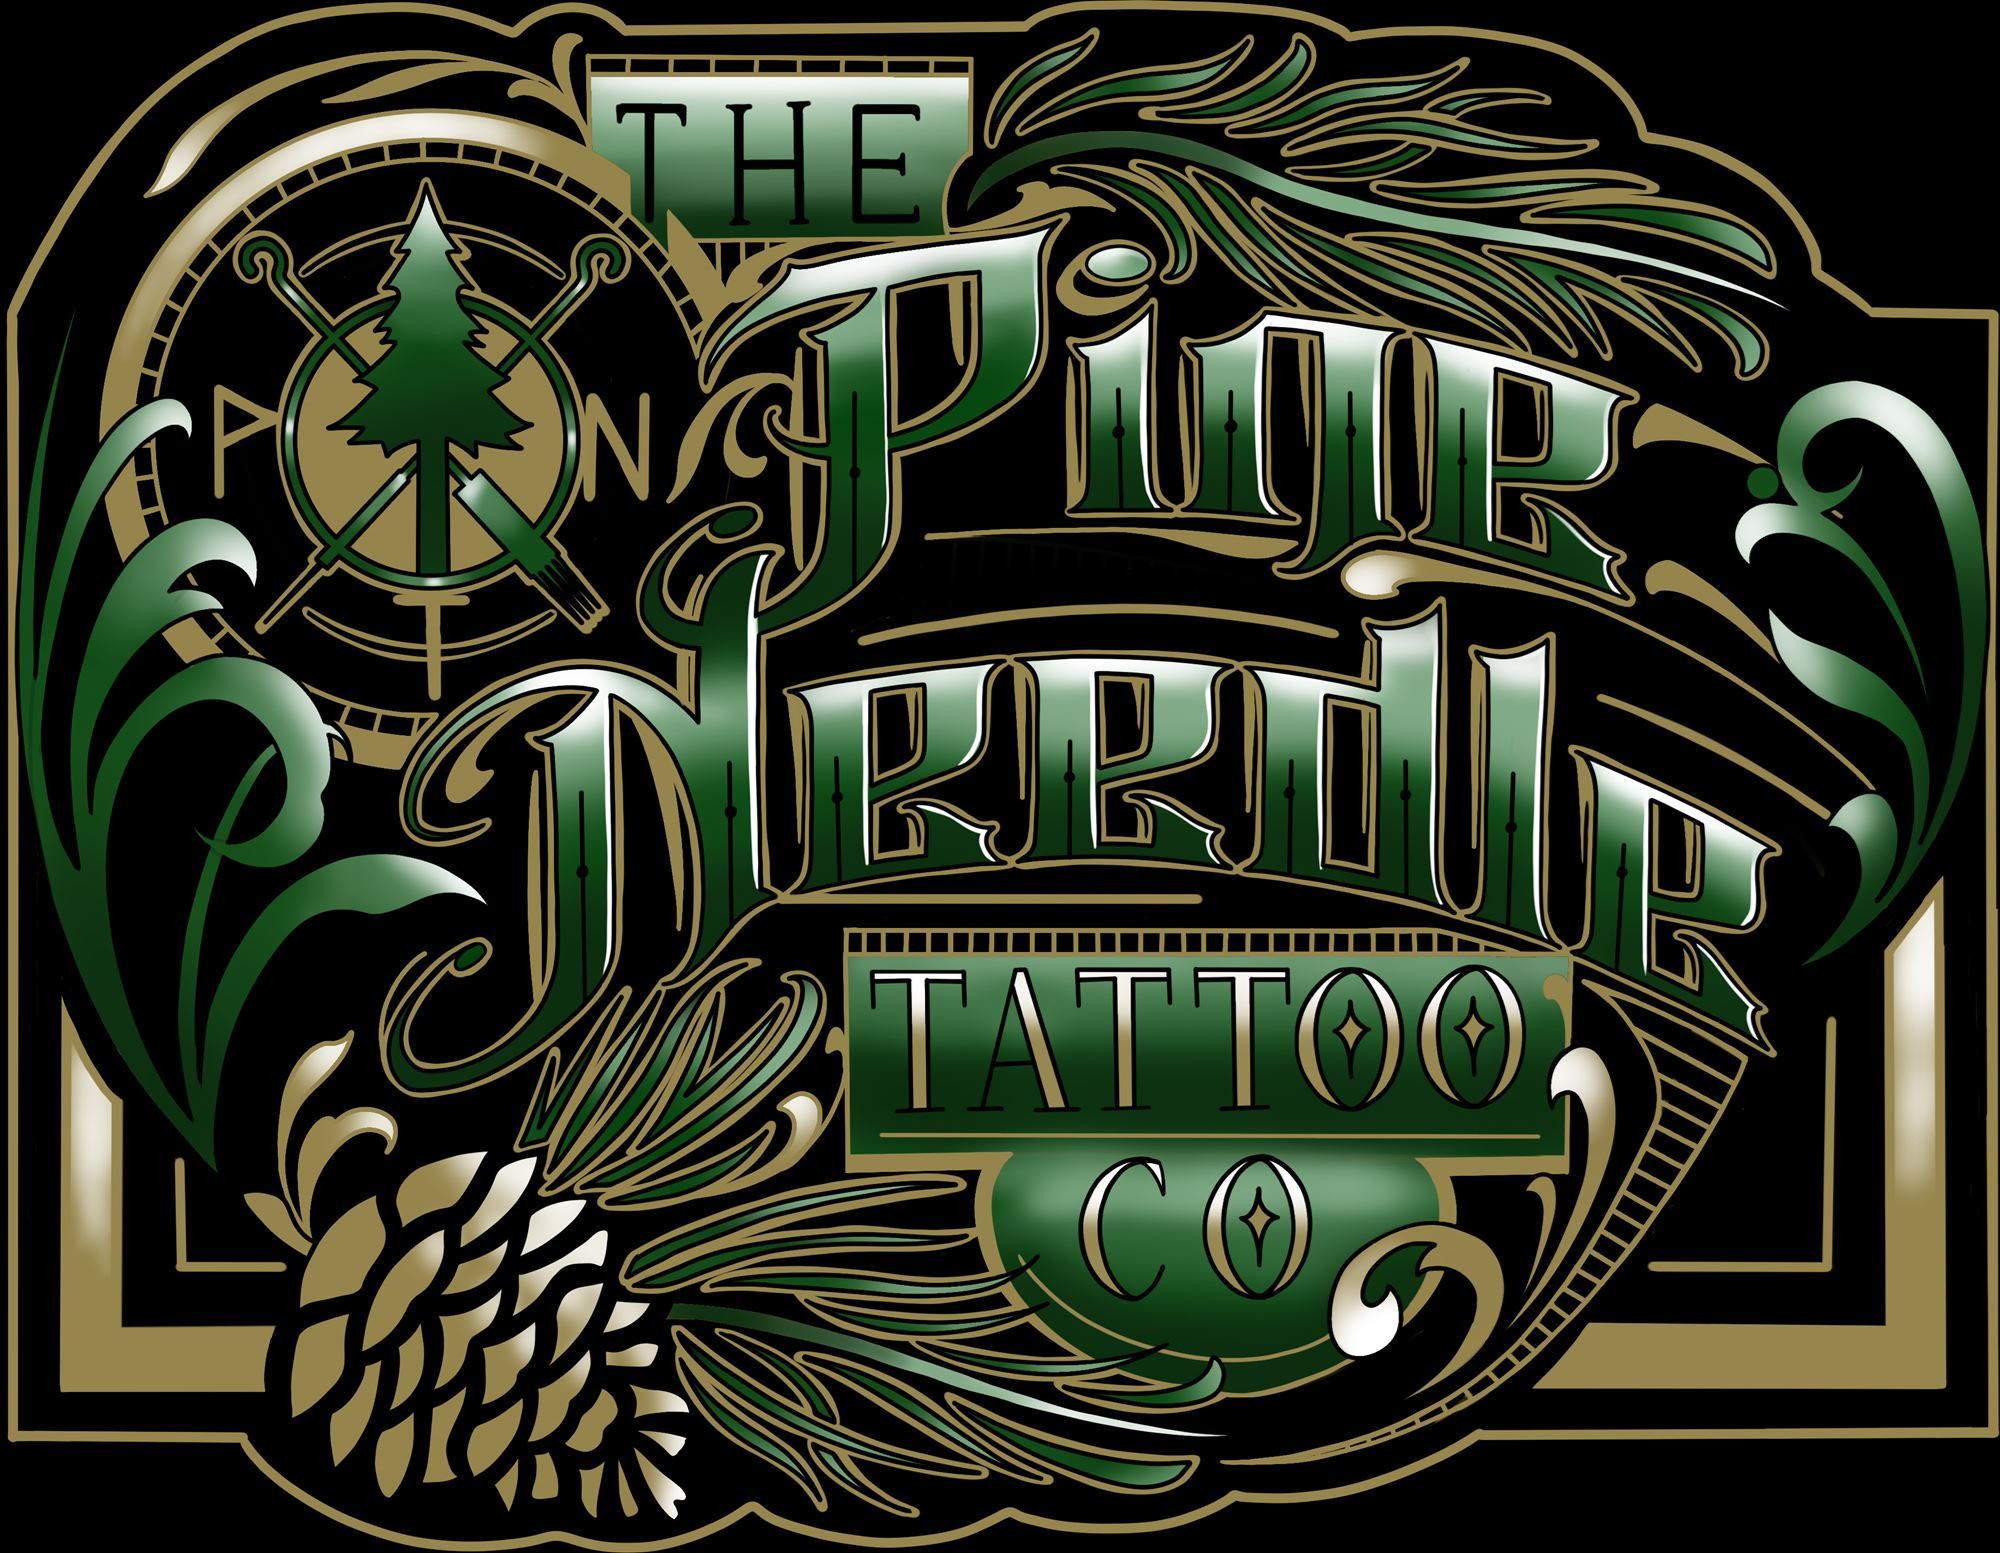 Pine Needle Tattoo Co.